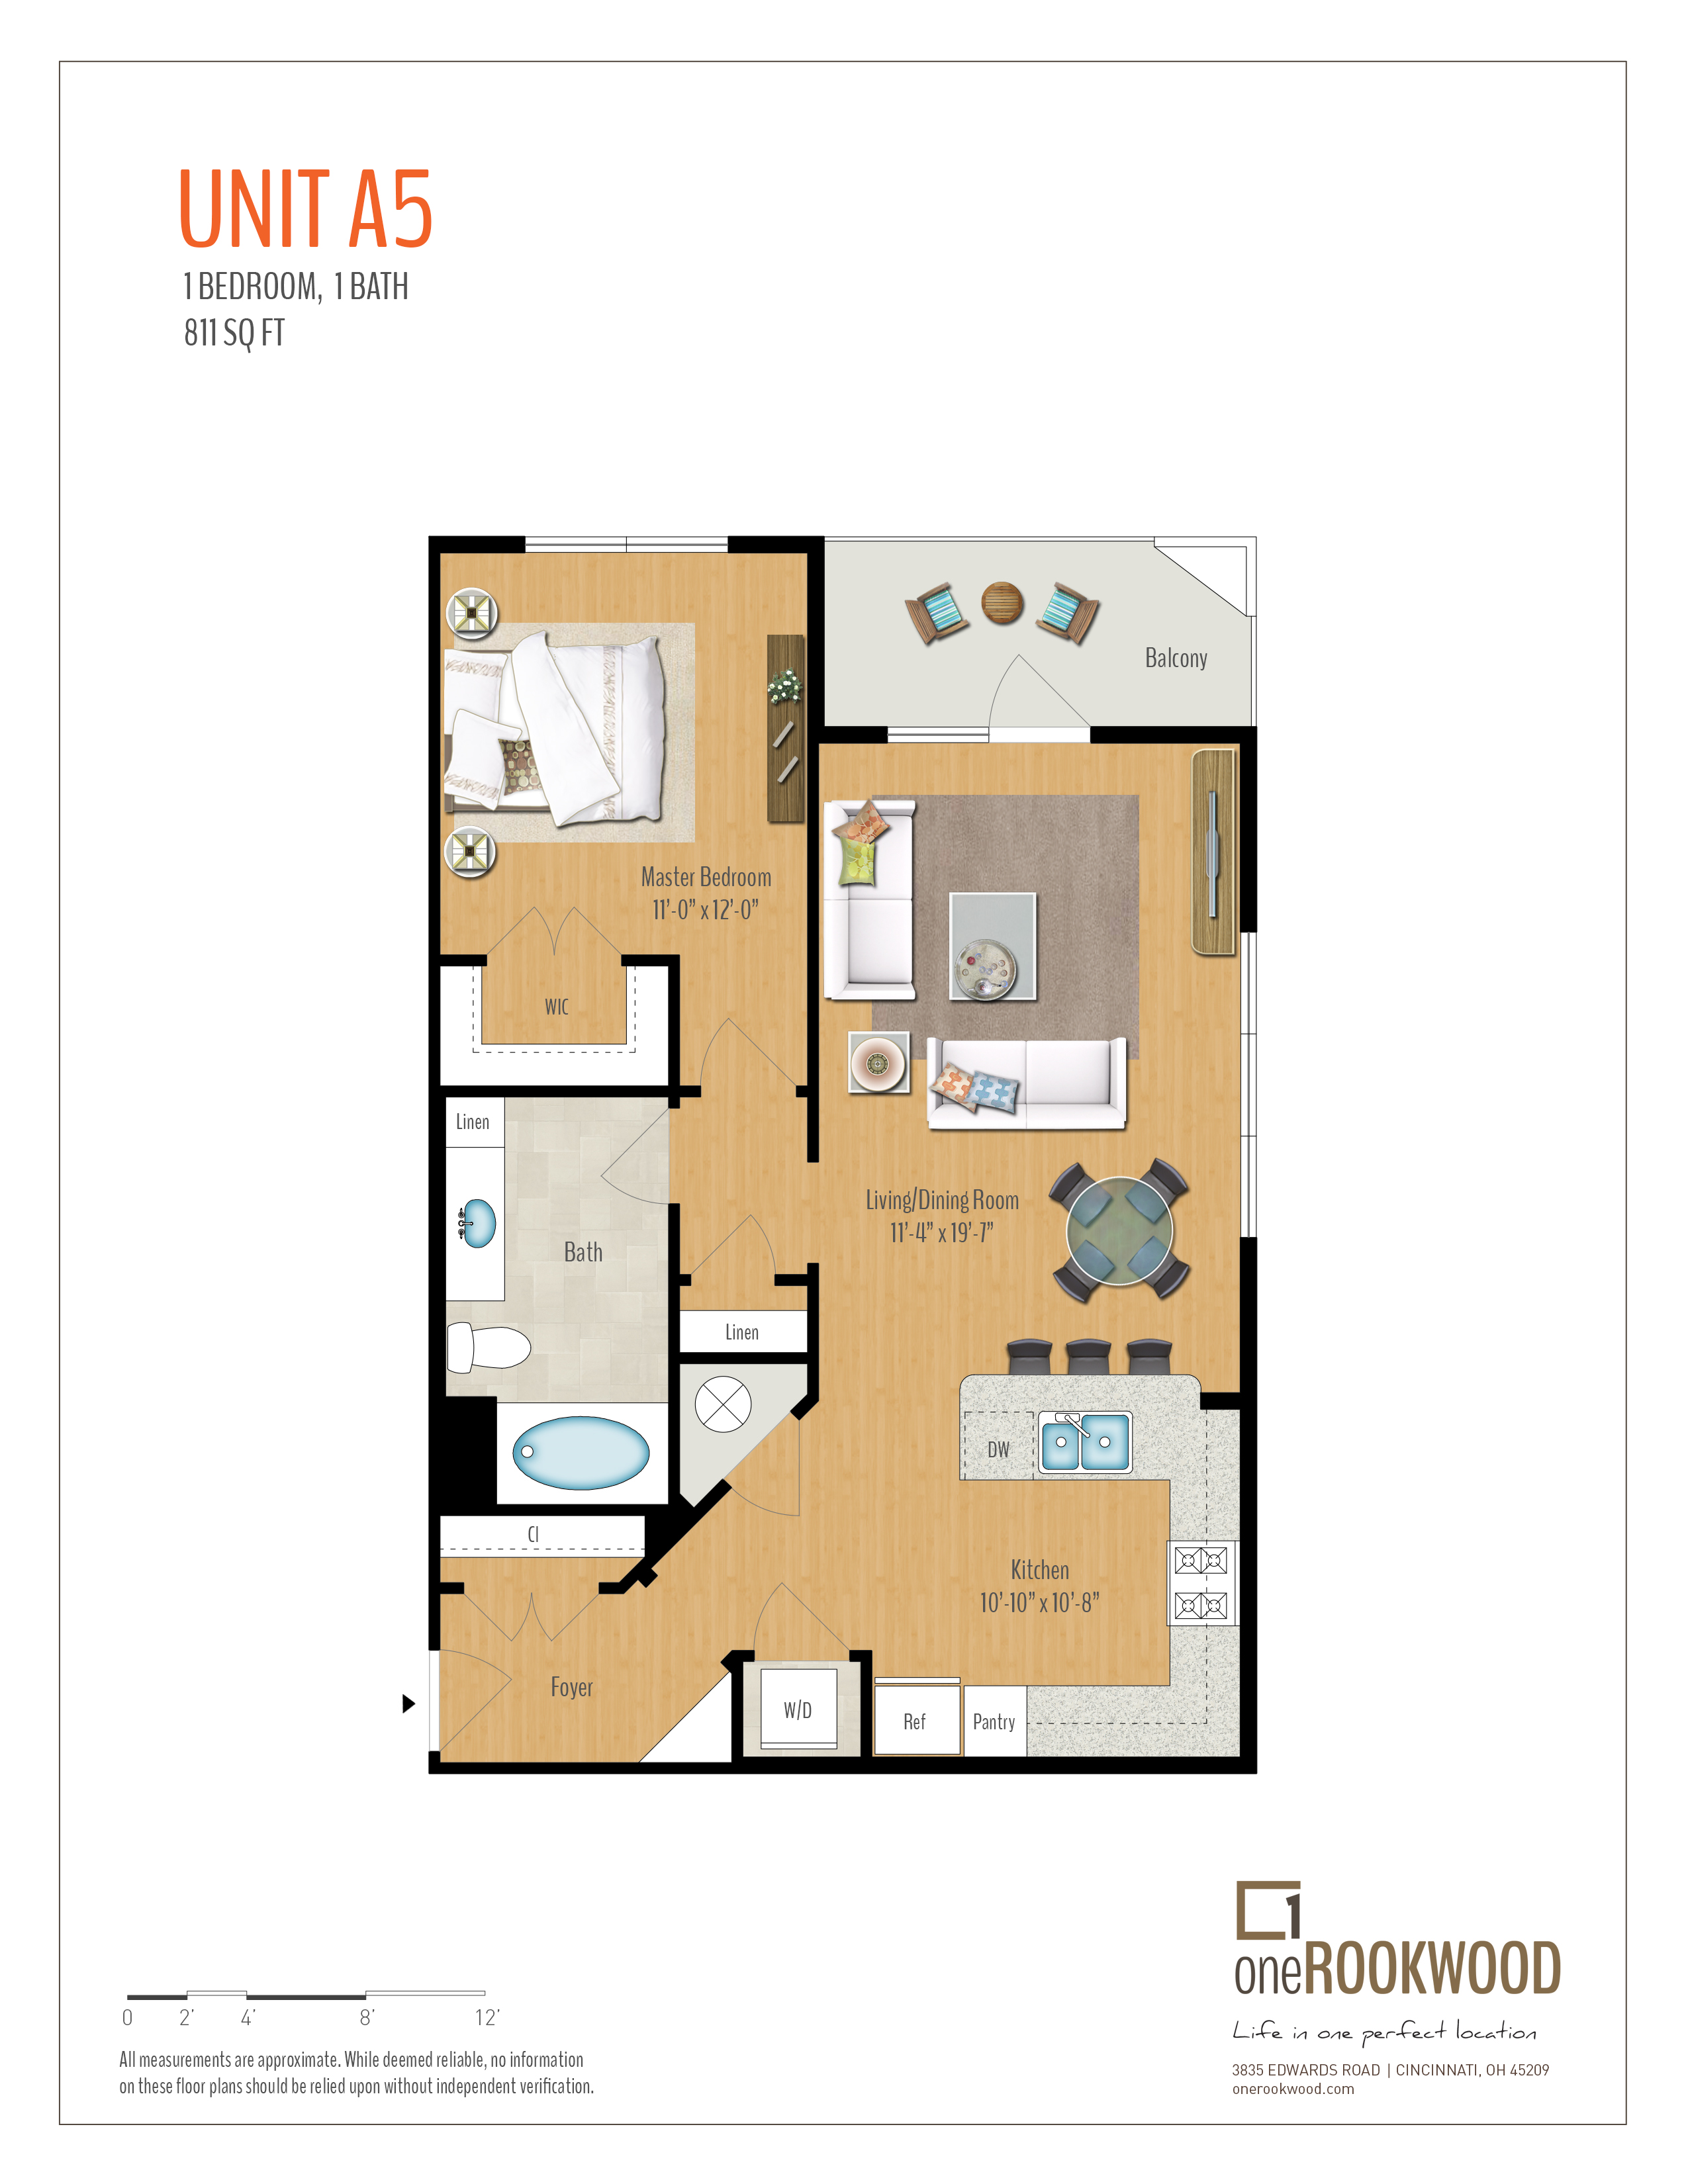 OneRookwood-Unit A5-FloorPlan-Print.jpg